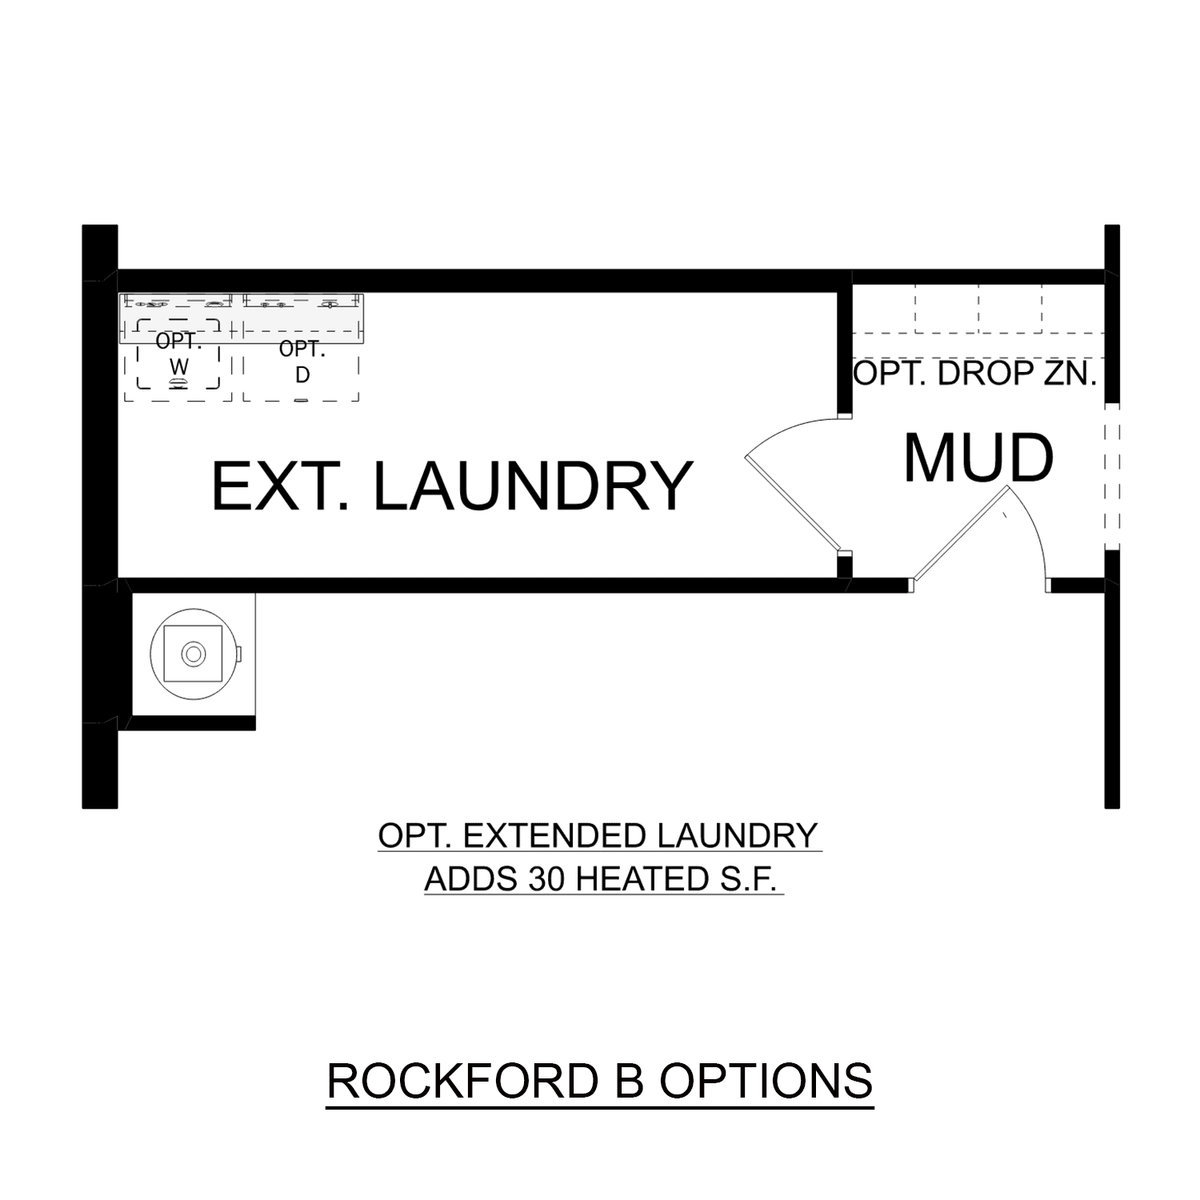 2 - The Rockford B floor plan layout for 2116 Brandon Drive in Davidson Homes' North Ridge community.